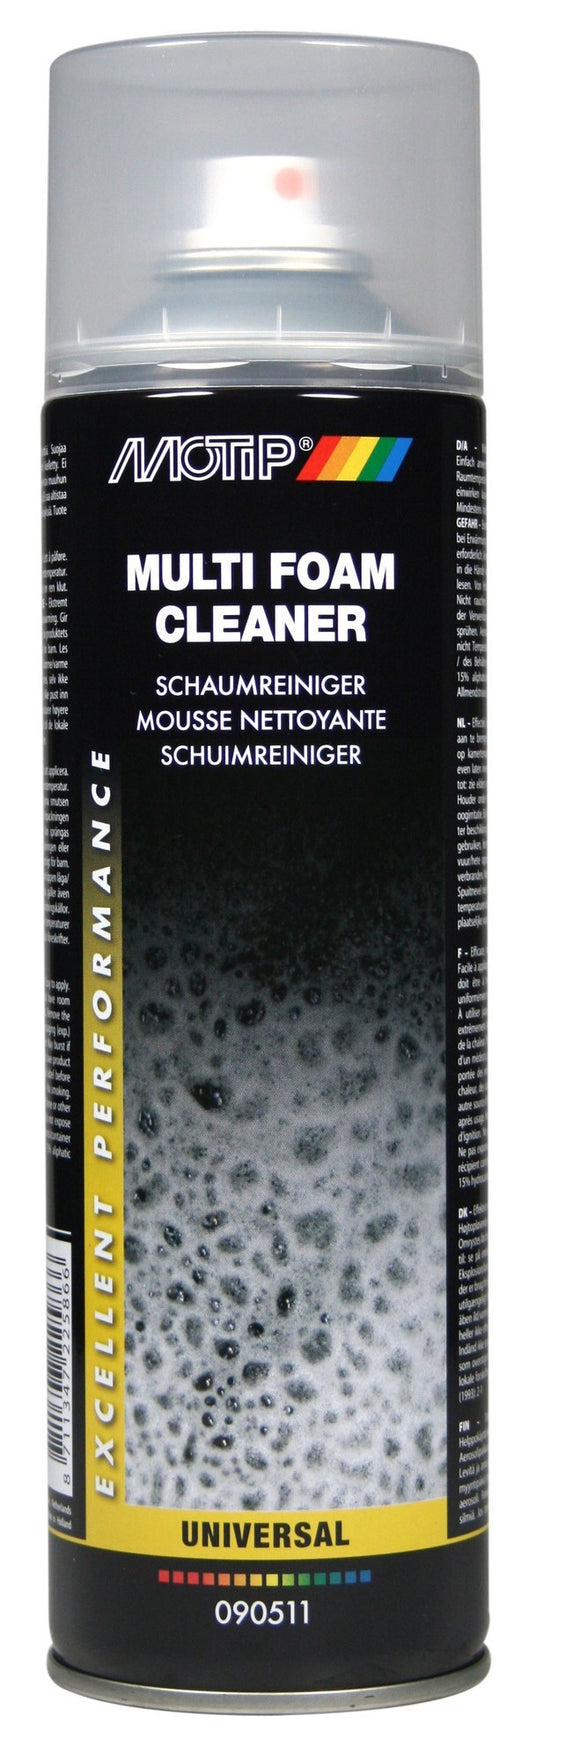 Motip Multifoam Cleaner 090511